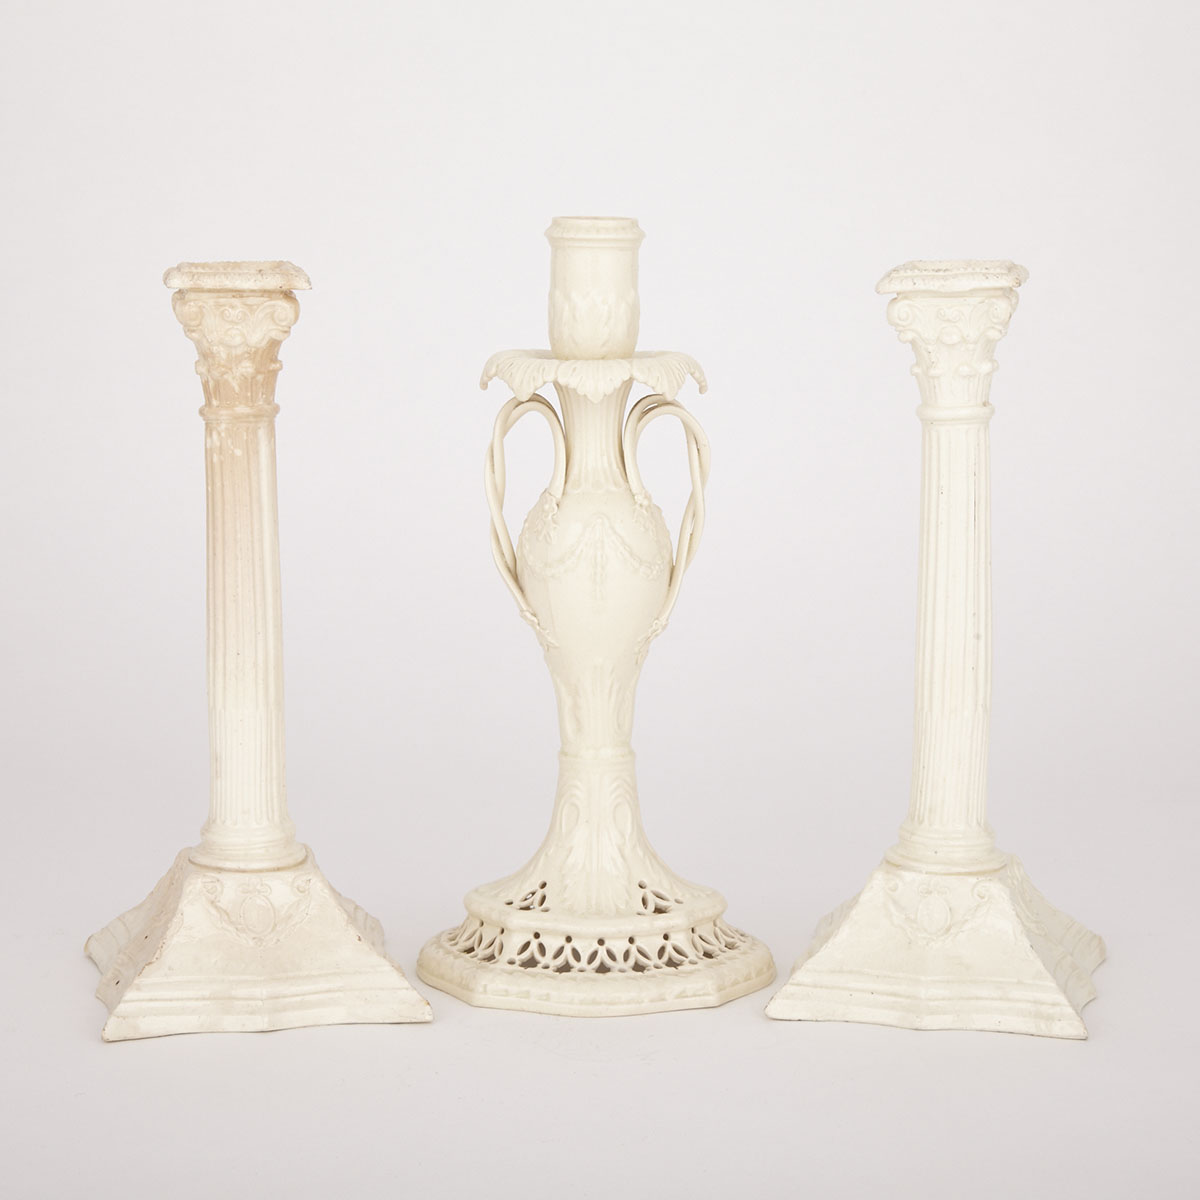 Three English Creamware Candlesticks, late 18th/19th century